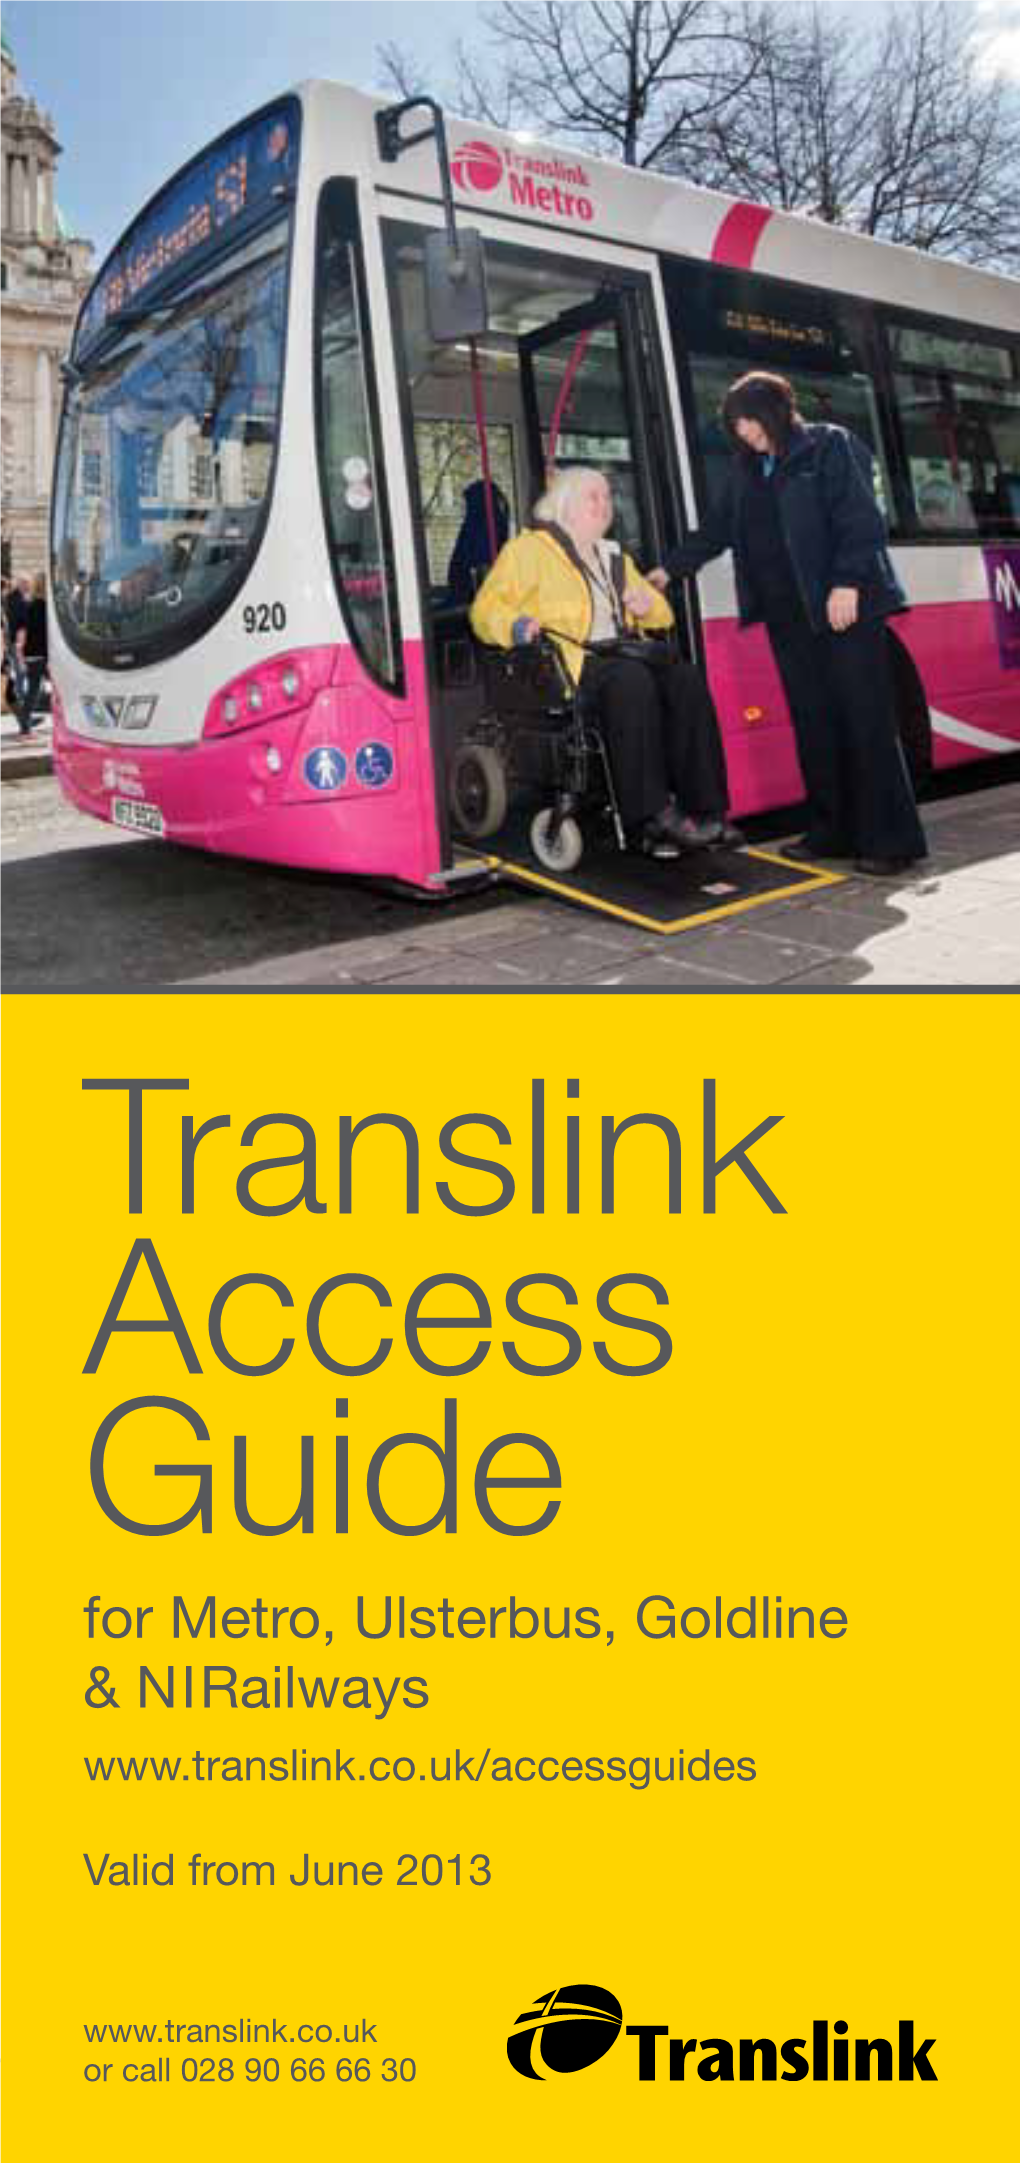 Translink Access Guide for Metro, Ulsterbus, Goldline & Nirailways